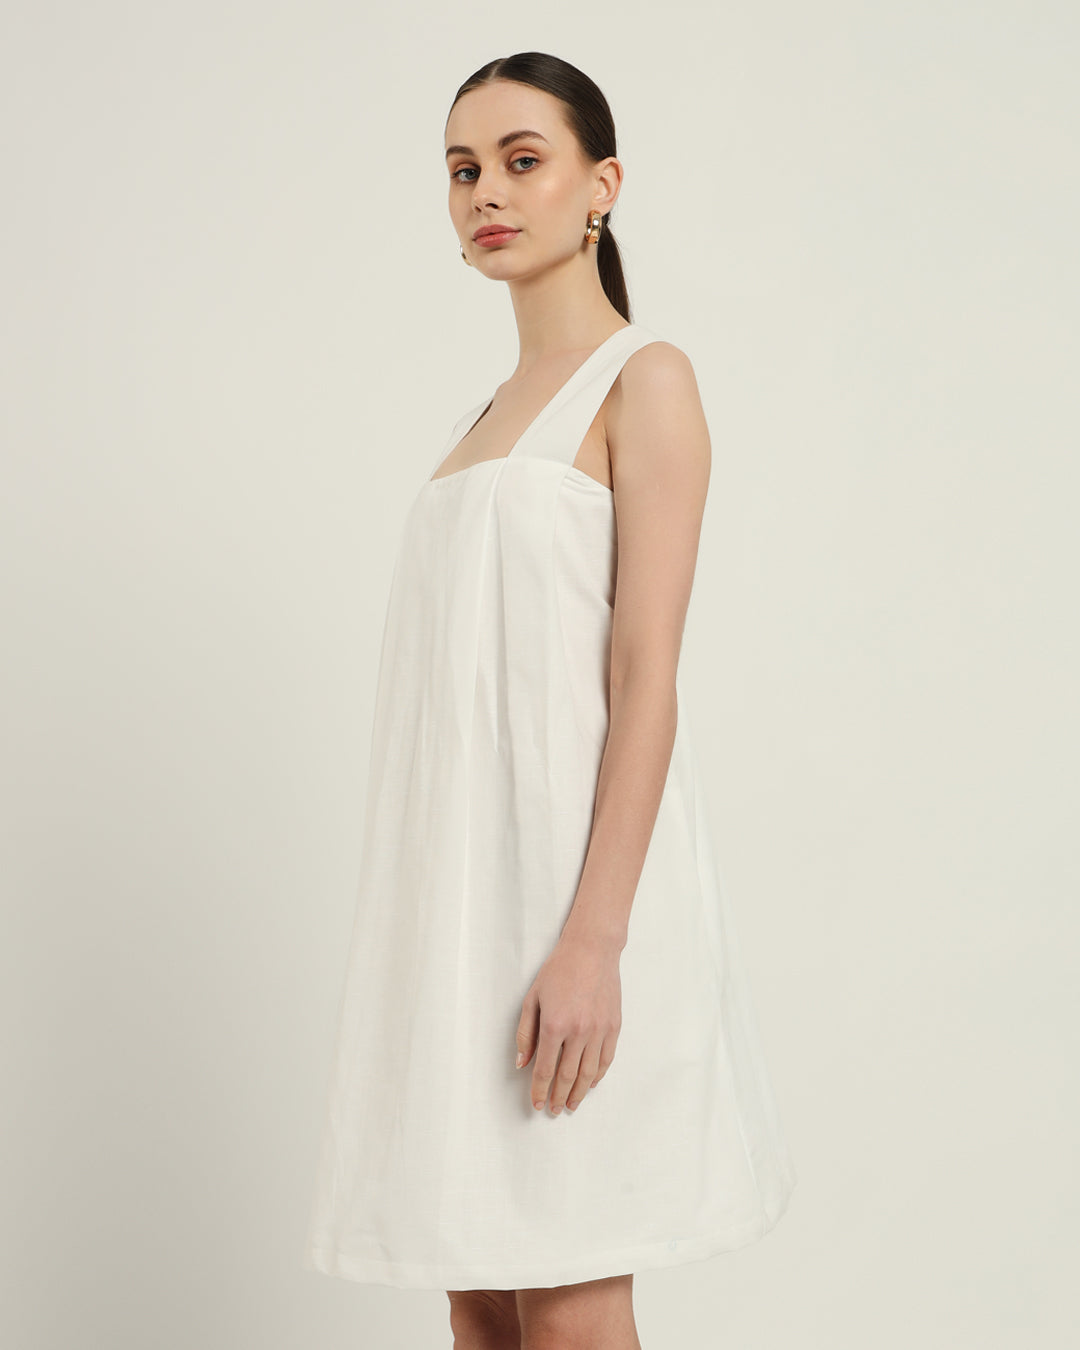 The Larissa Daisy White Linen Dress